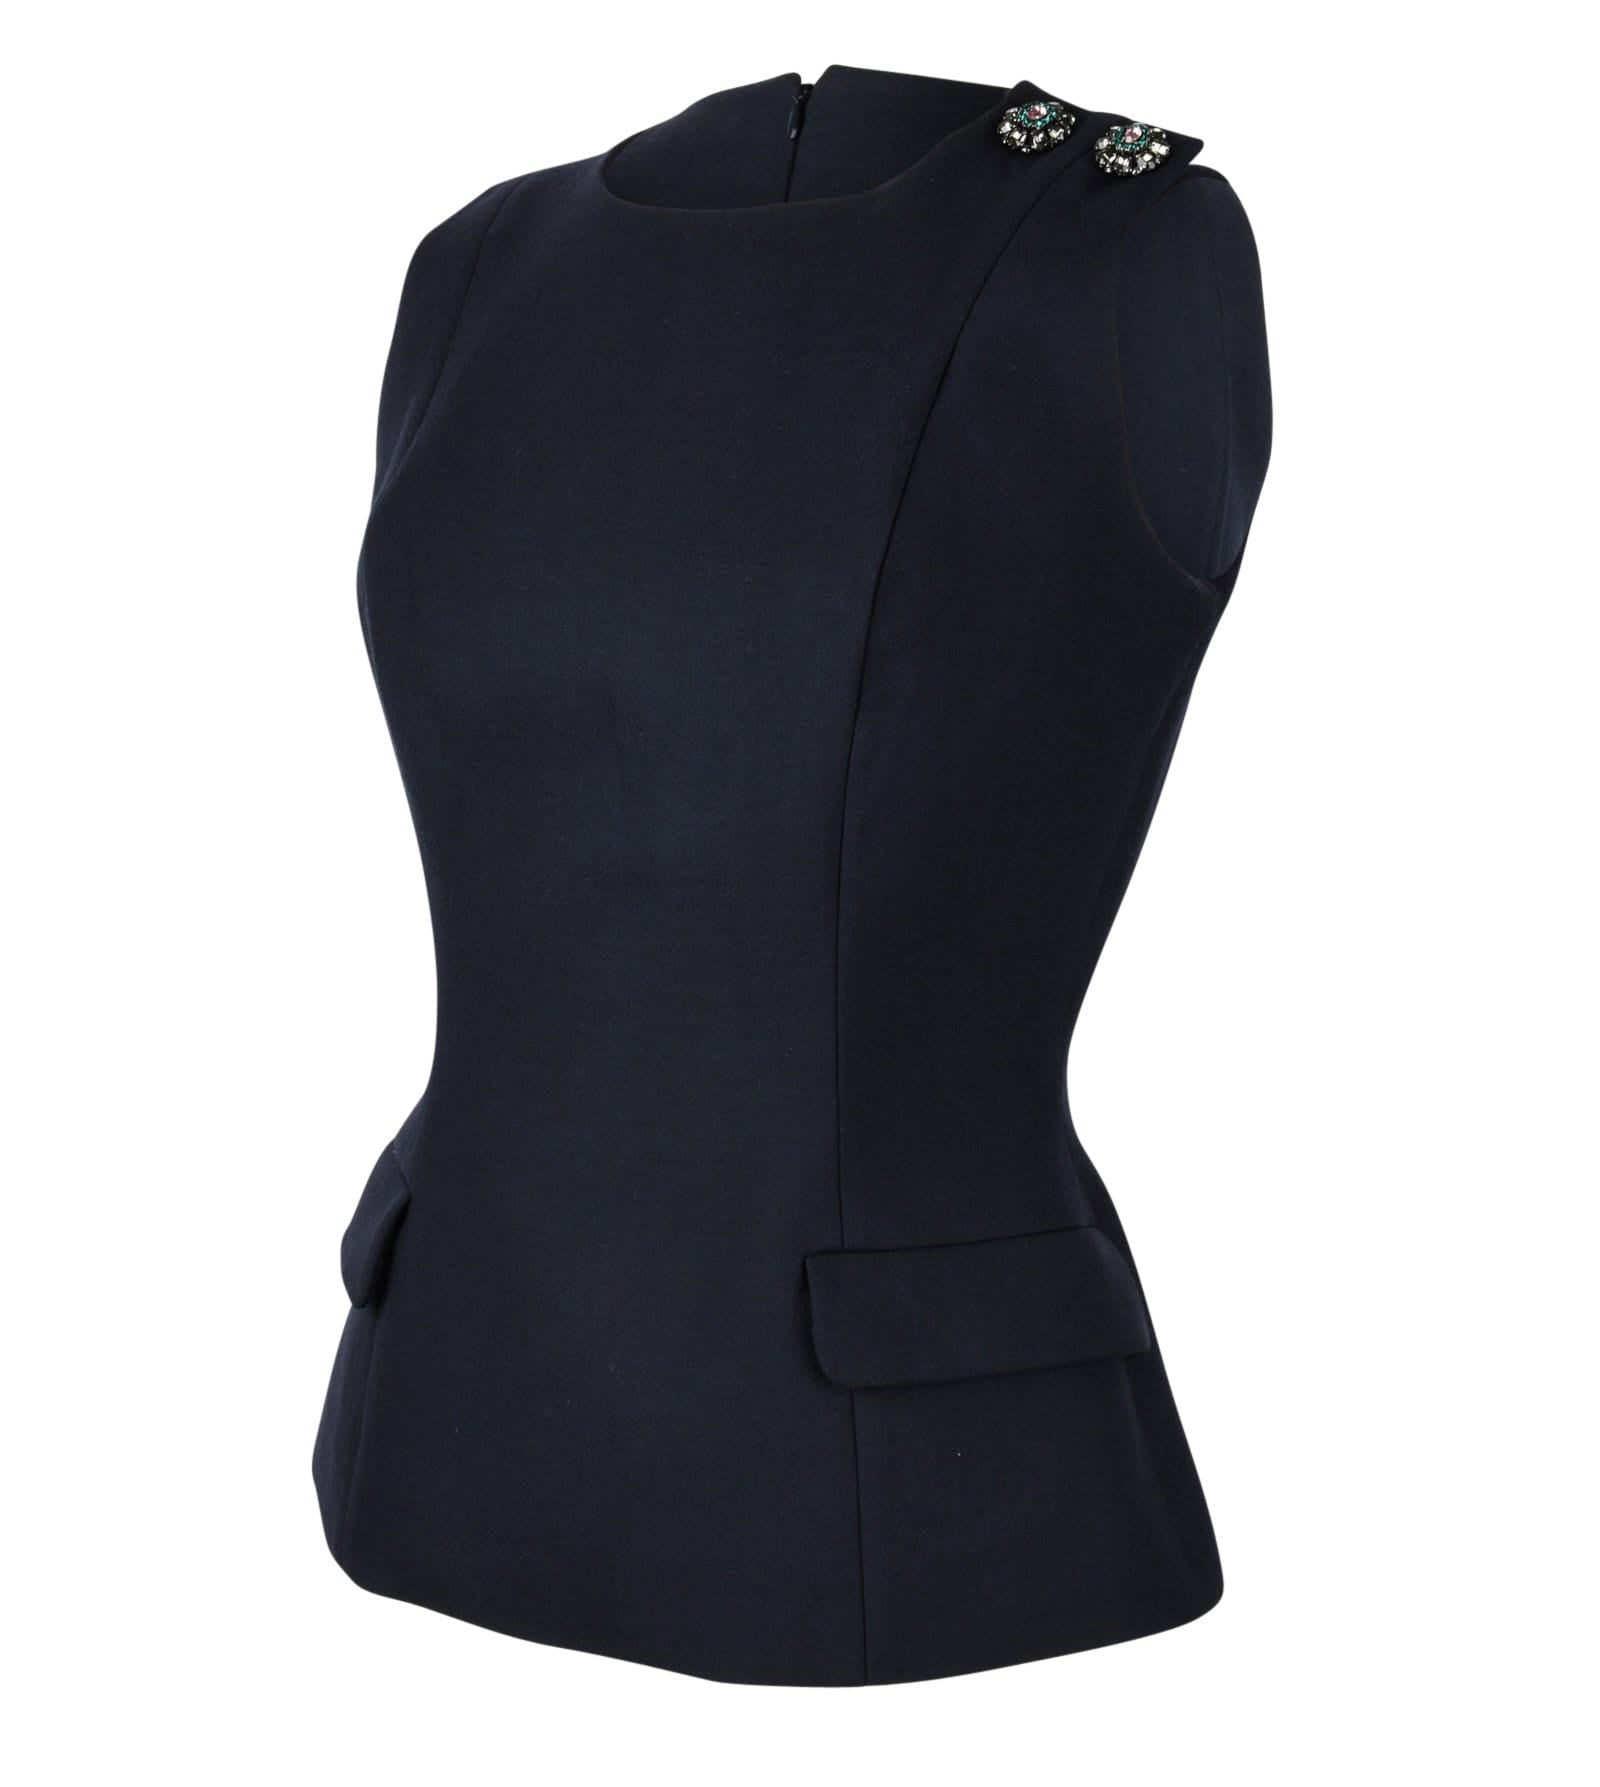 Christian Dior Top Black Sleeveless Jeweled Shoulder 6 - mightychic